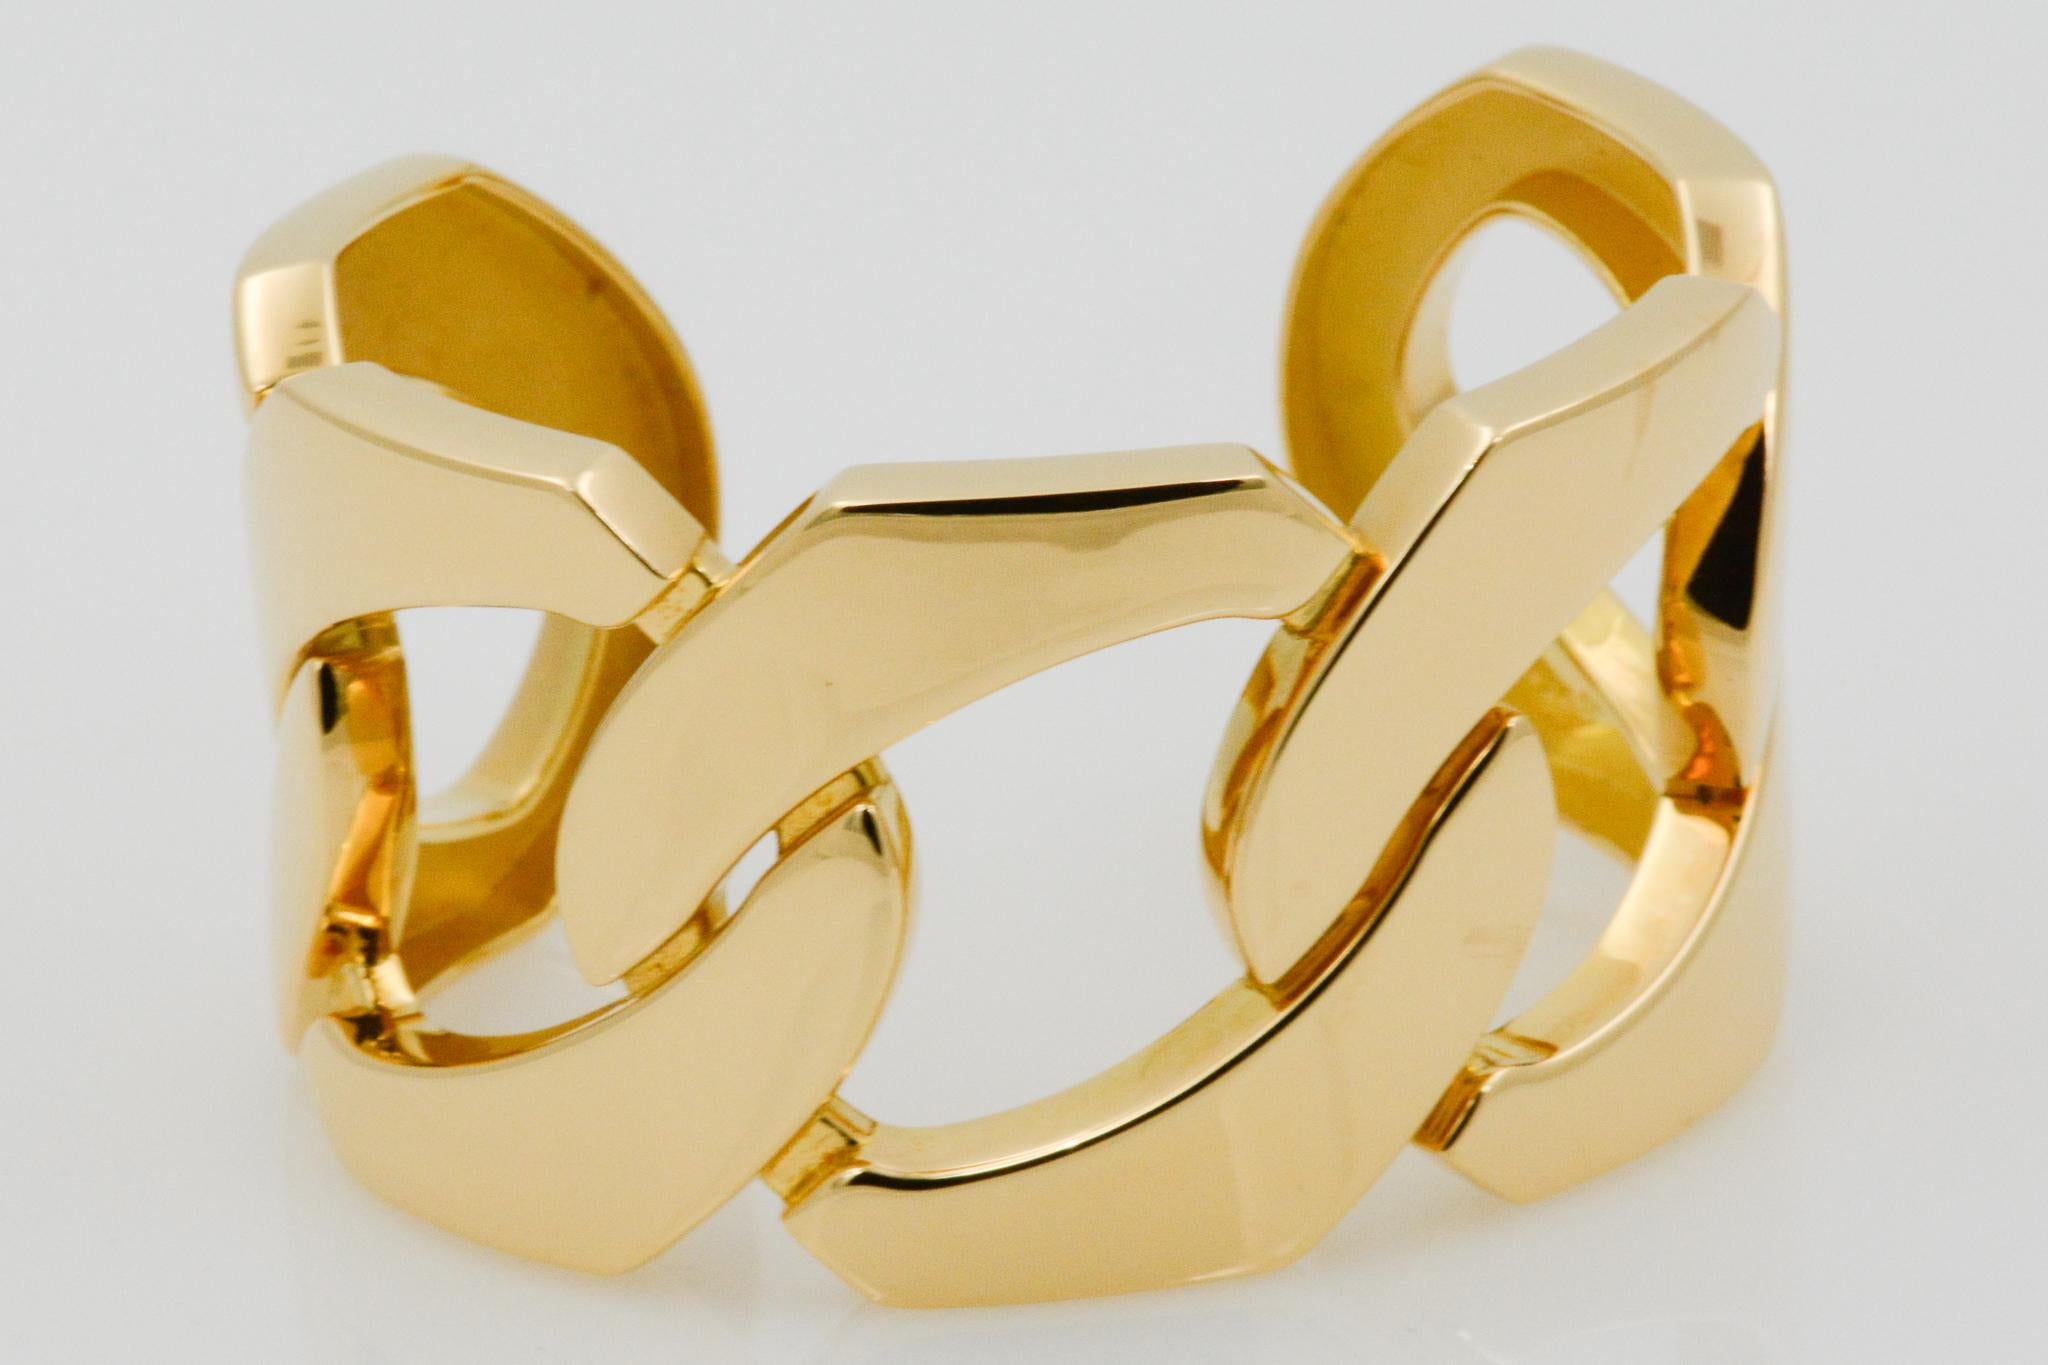 From Seaman Schepps, this 18k yellow gold flat link cuff bracelet, features an interlocking design. 